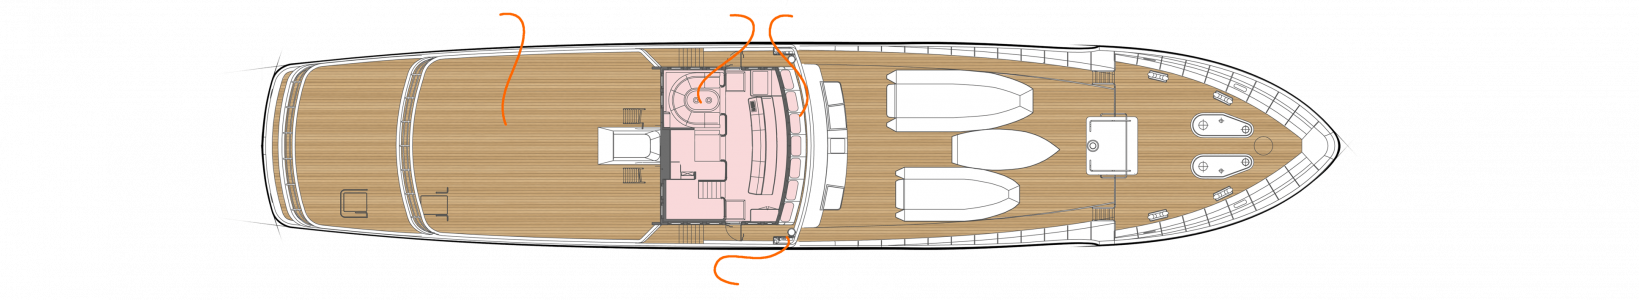 Wheelhouse deck  